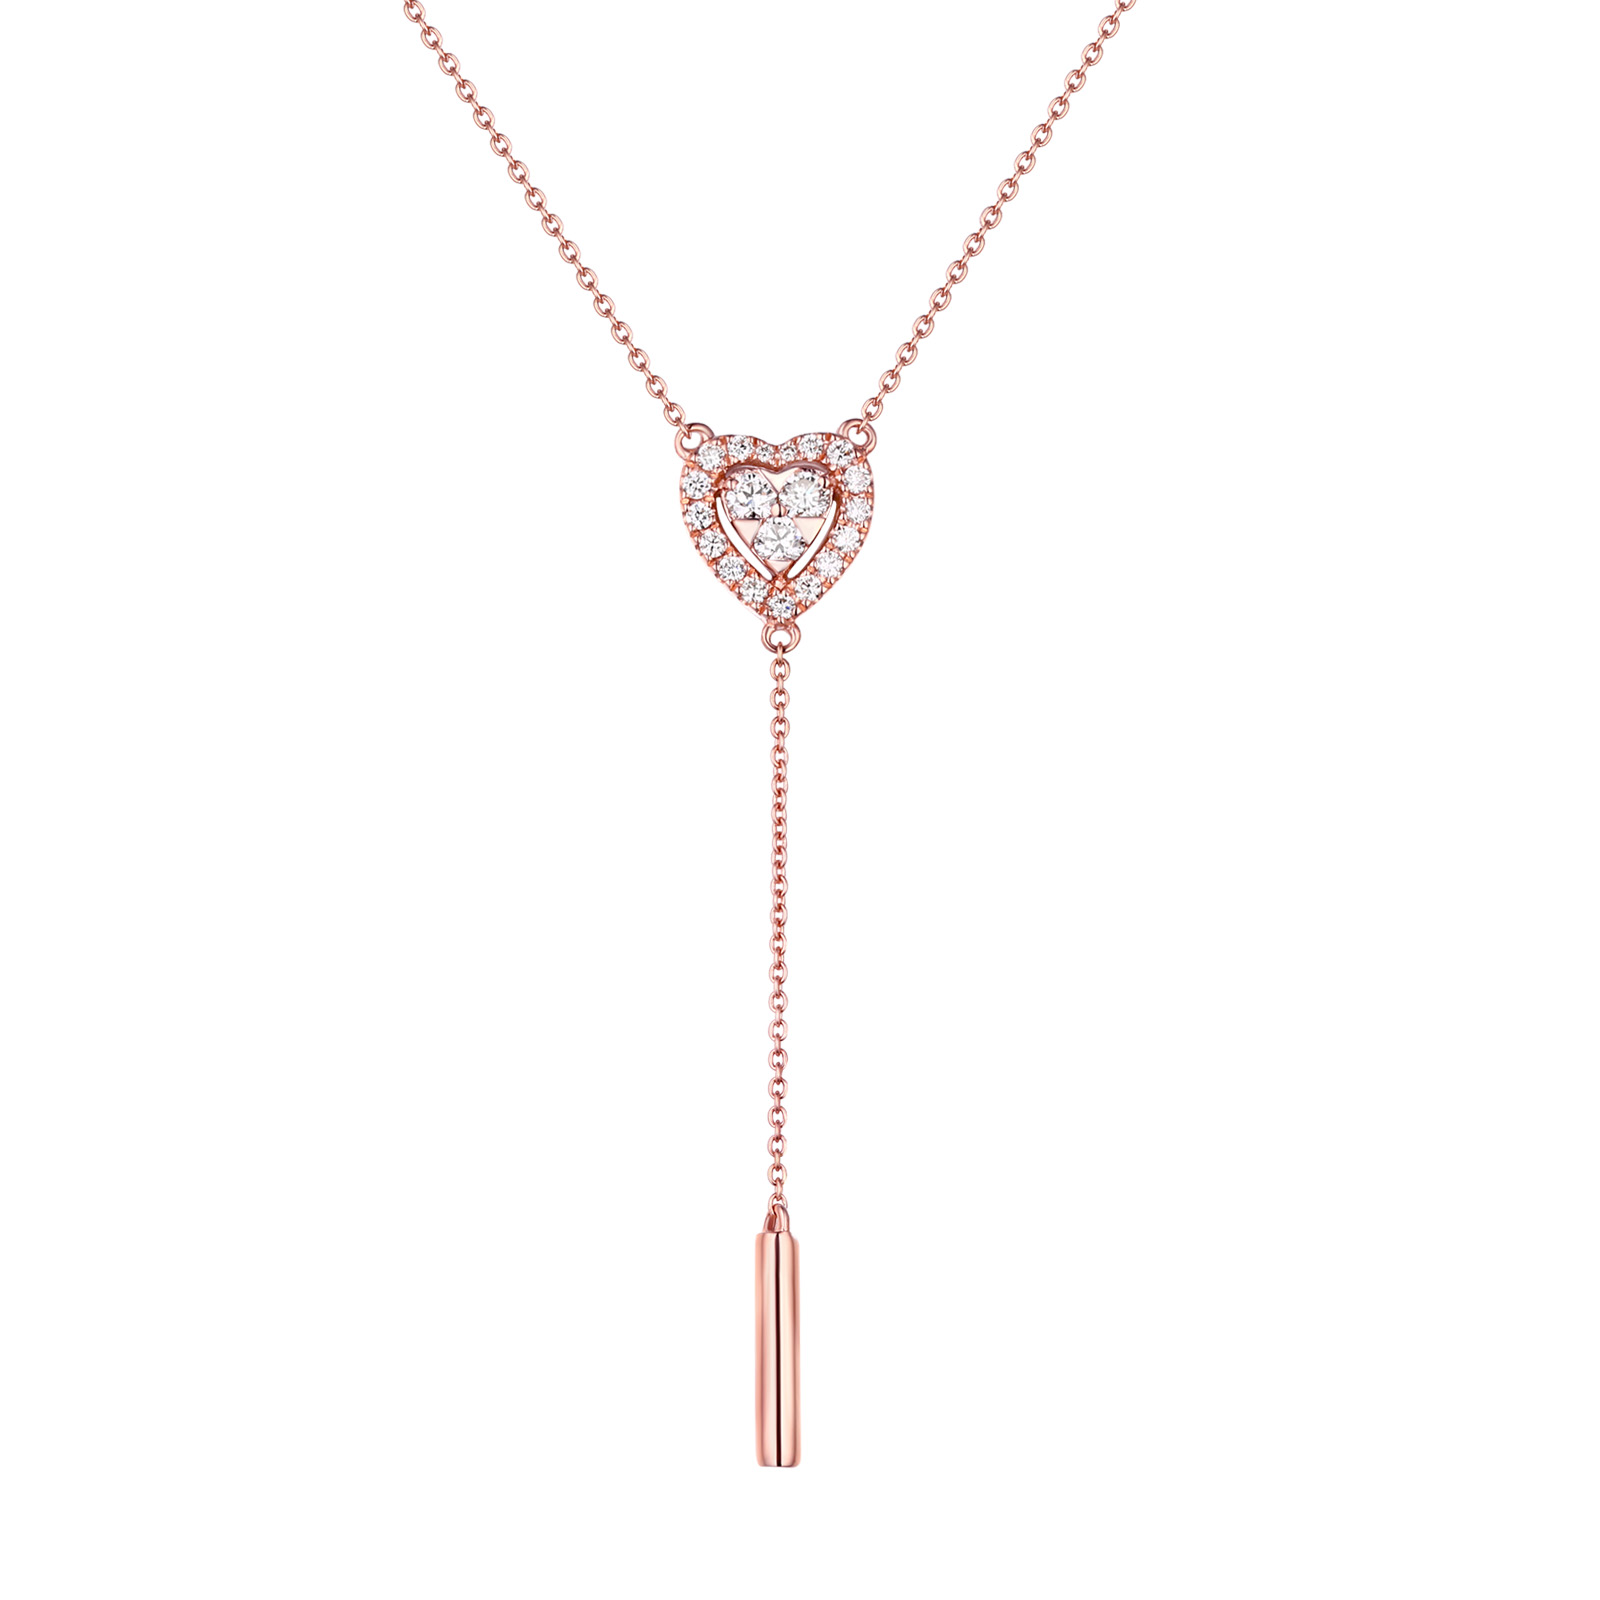 NL25529WHT- 14K Rose Gold Diamond Necklace, 0.26 TCW